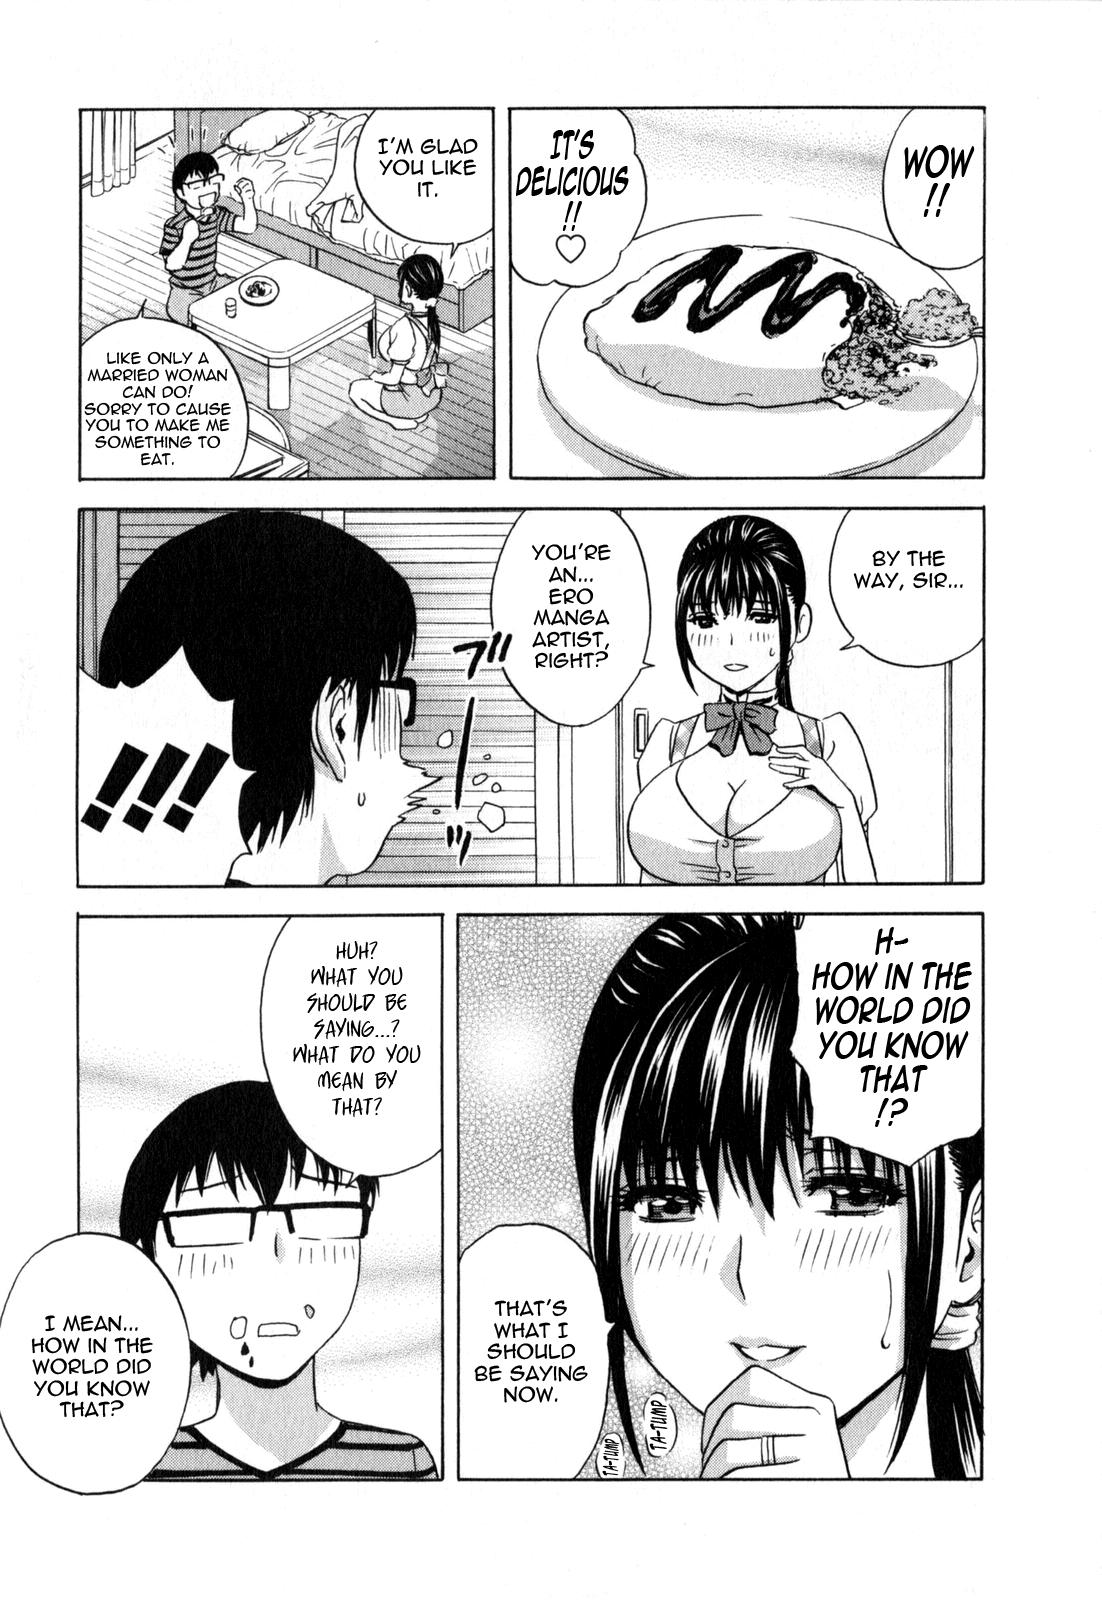 [Hidemaru] Life with Married Women Just Like a Manga 2 - Ch. 1-6 [English] {Tadanohito} 113